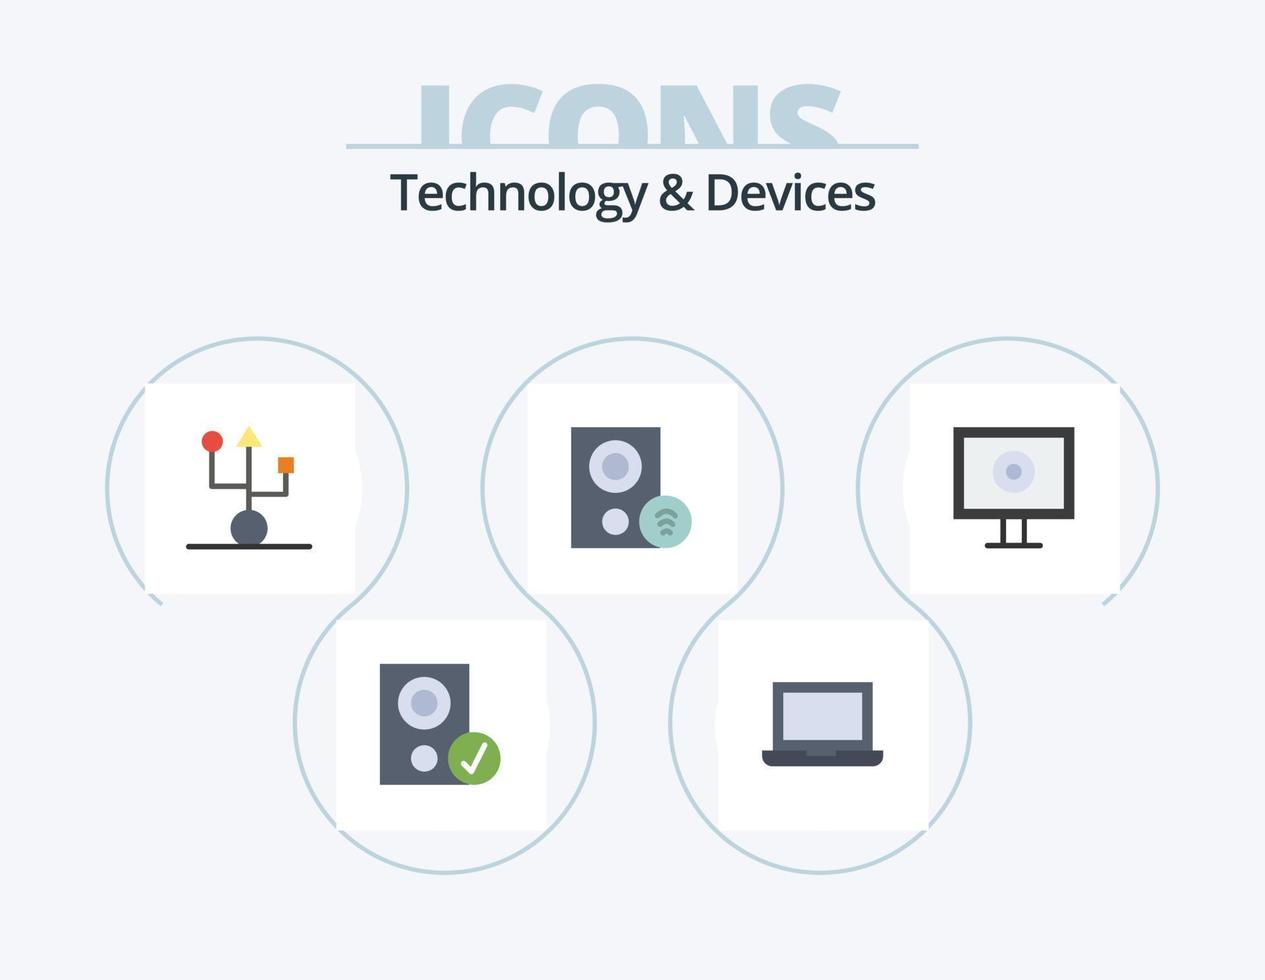 dispositivos flat icon pack 5 diseño de iconos. señal. artilugio. ordenadores. dispositivos. tecnología vector